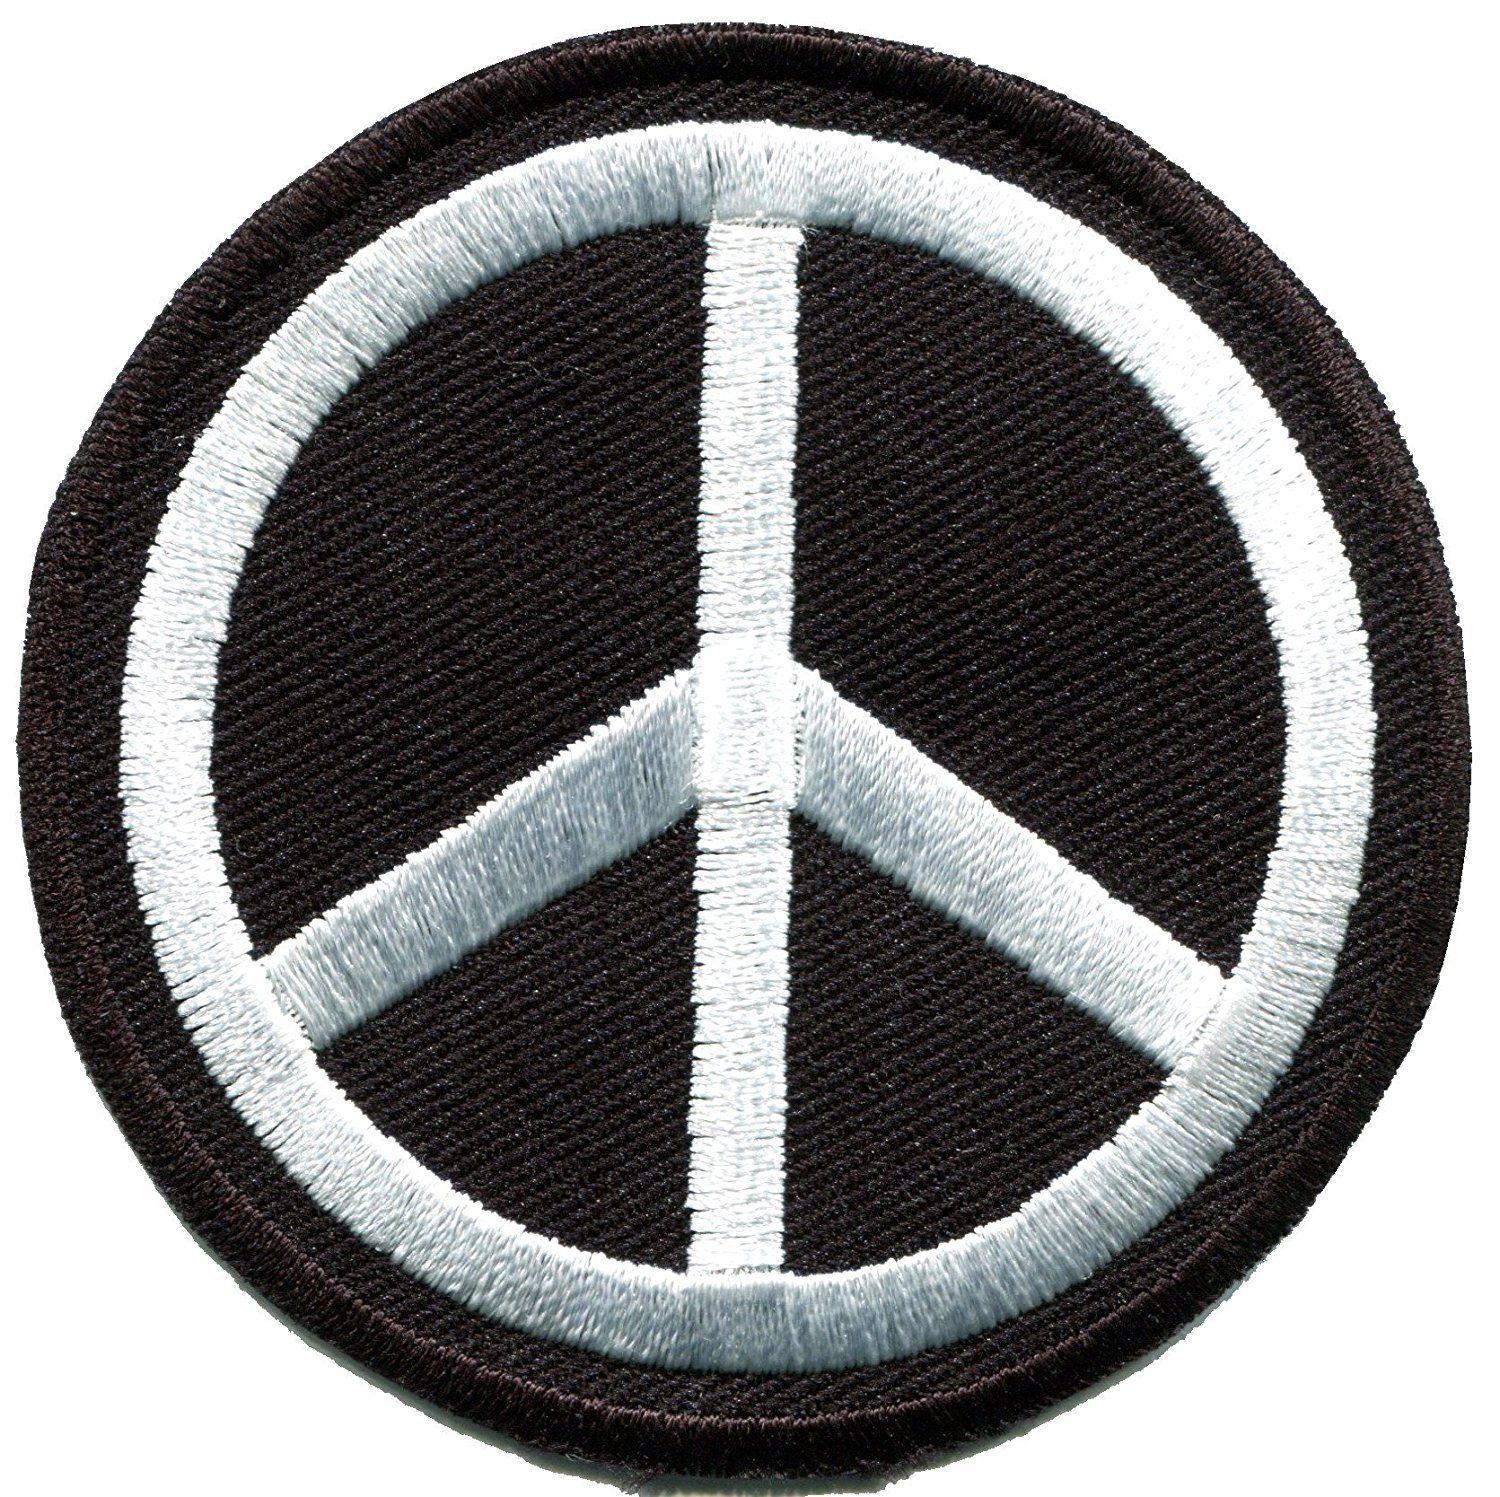 Hippie Flower Logo - Peace sign white on black hippie retro boho flower power